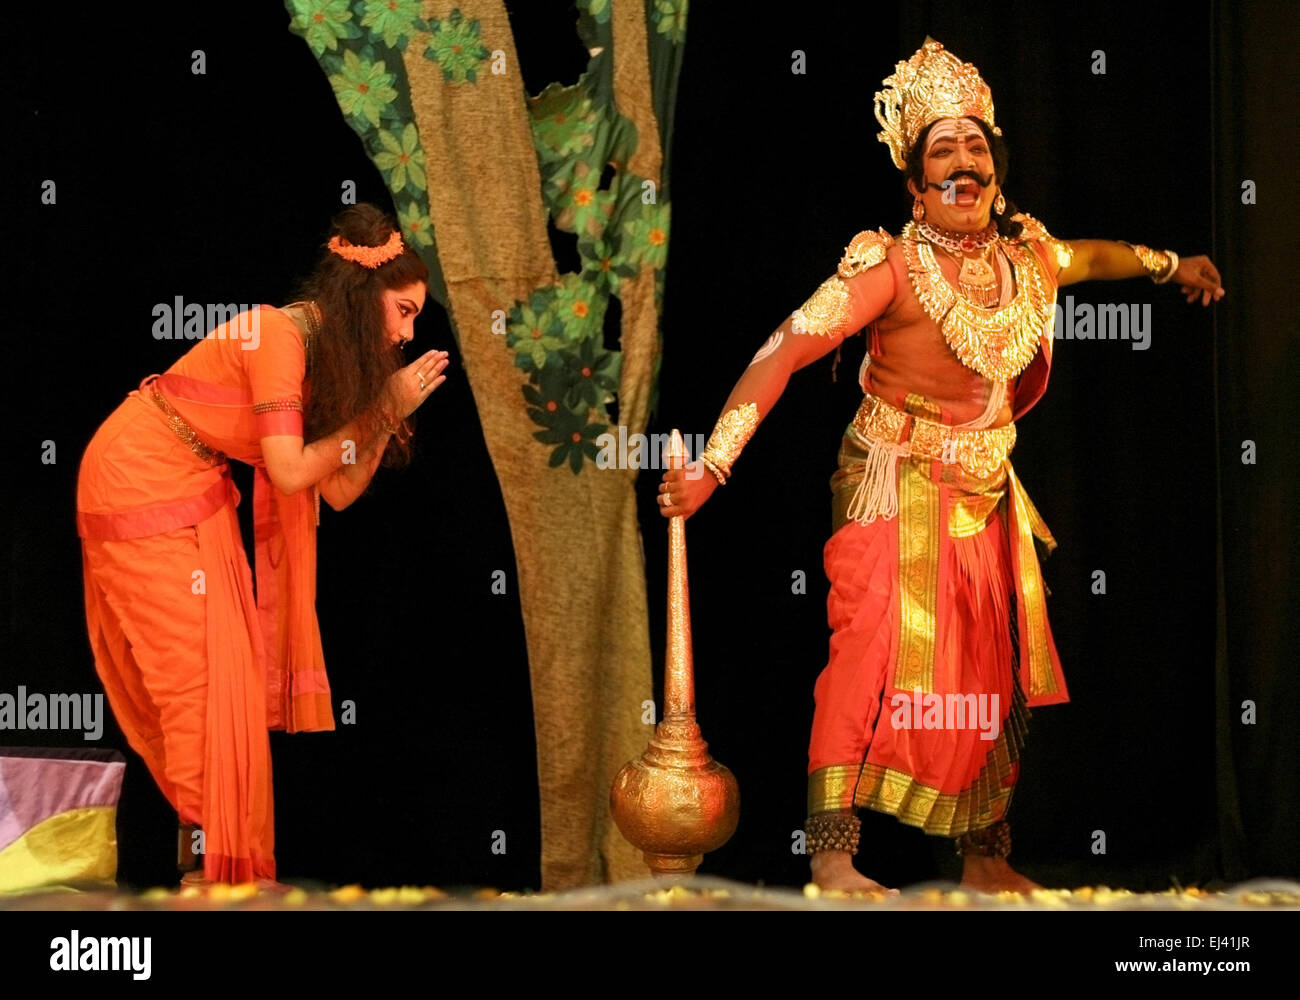 sobhanaidu Kuchipudi dancer perform as God Rama in dance ballet with Ramayana theme on November 18,2012 in Hyderabad,India. Stock Photo